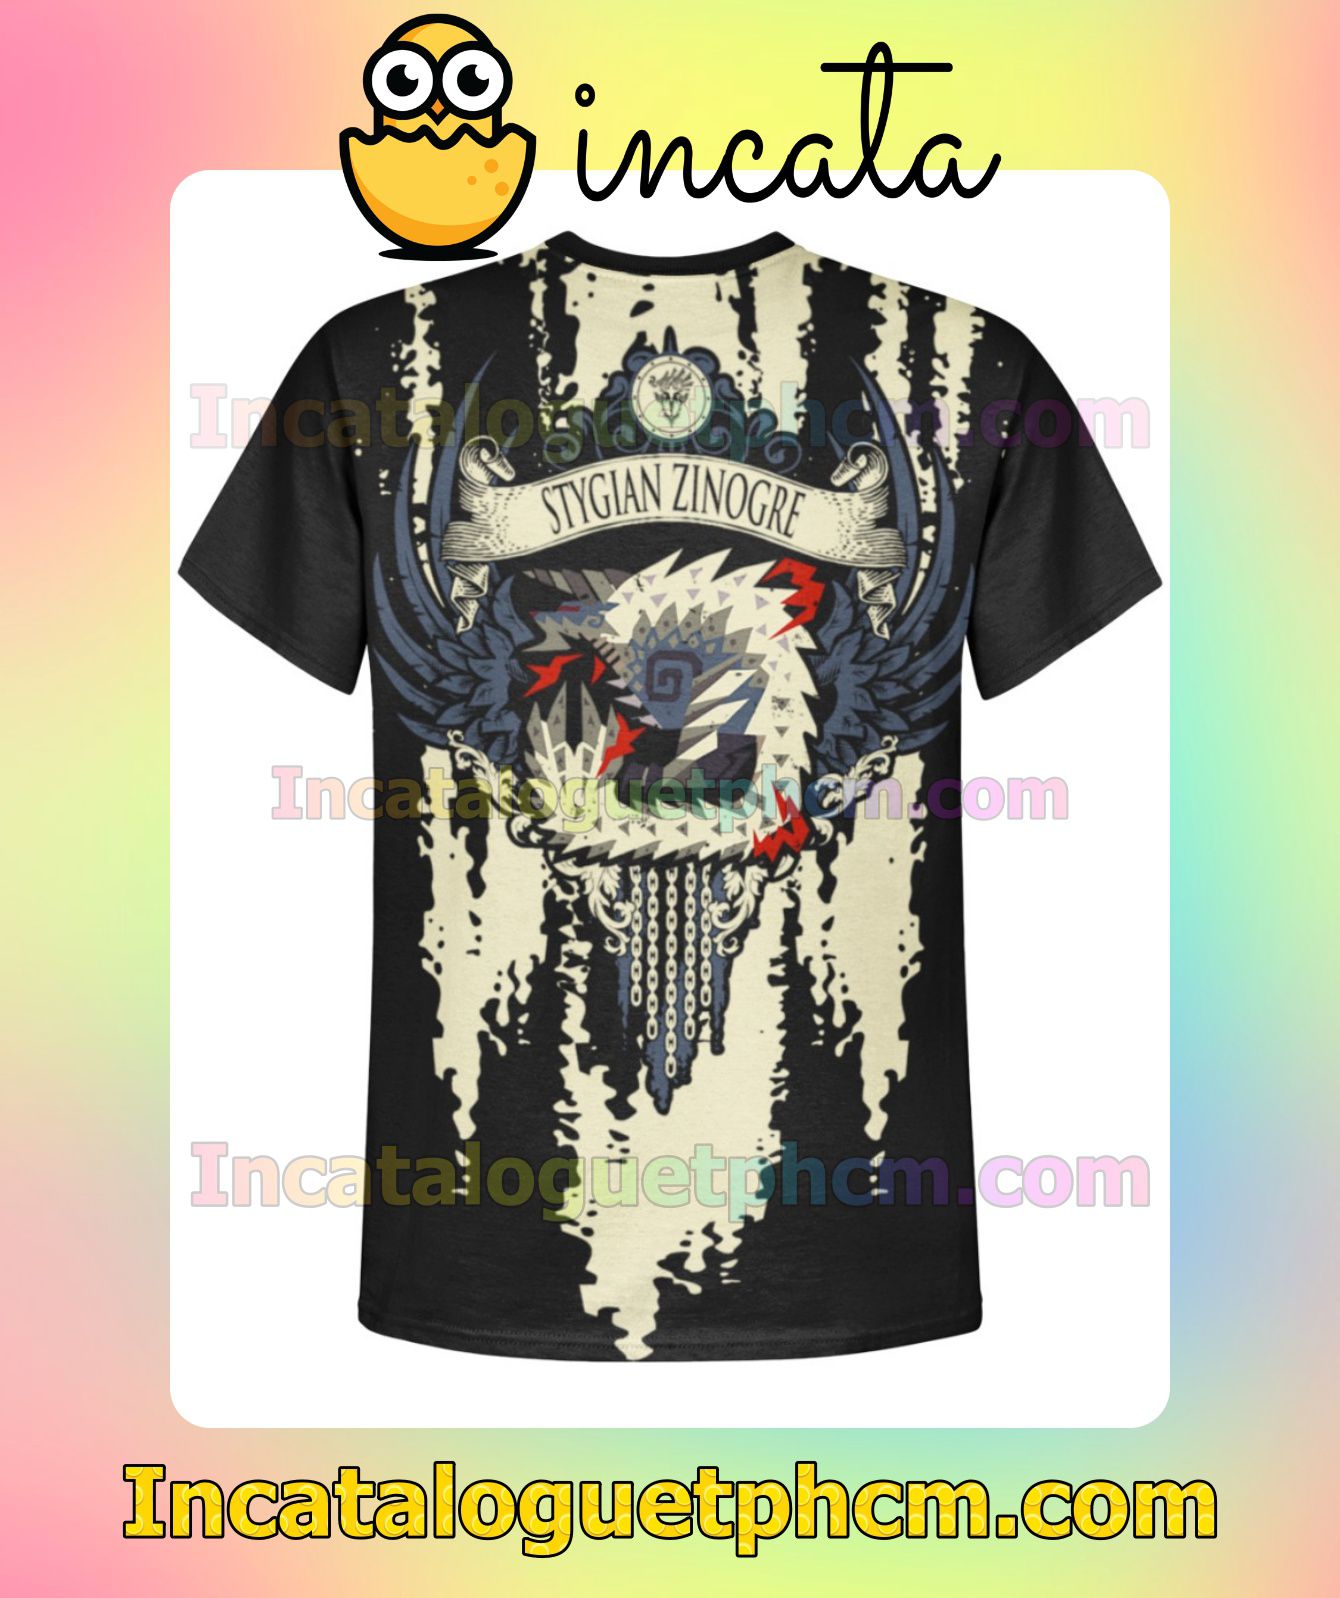 Sale Off Stygian Zinogre Monster Hunter World Fan Gift Shirt